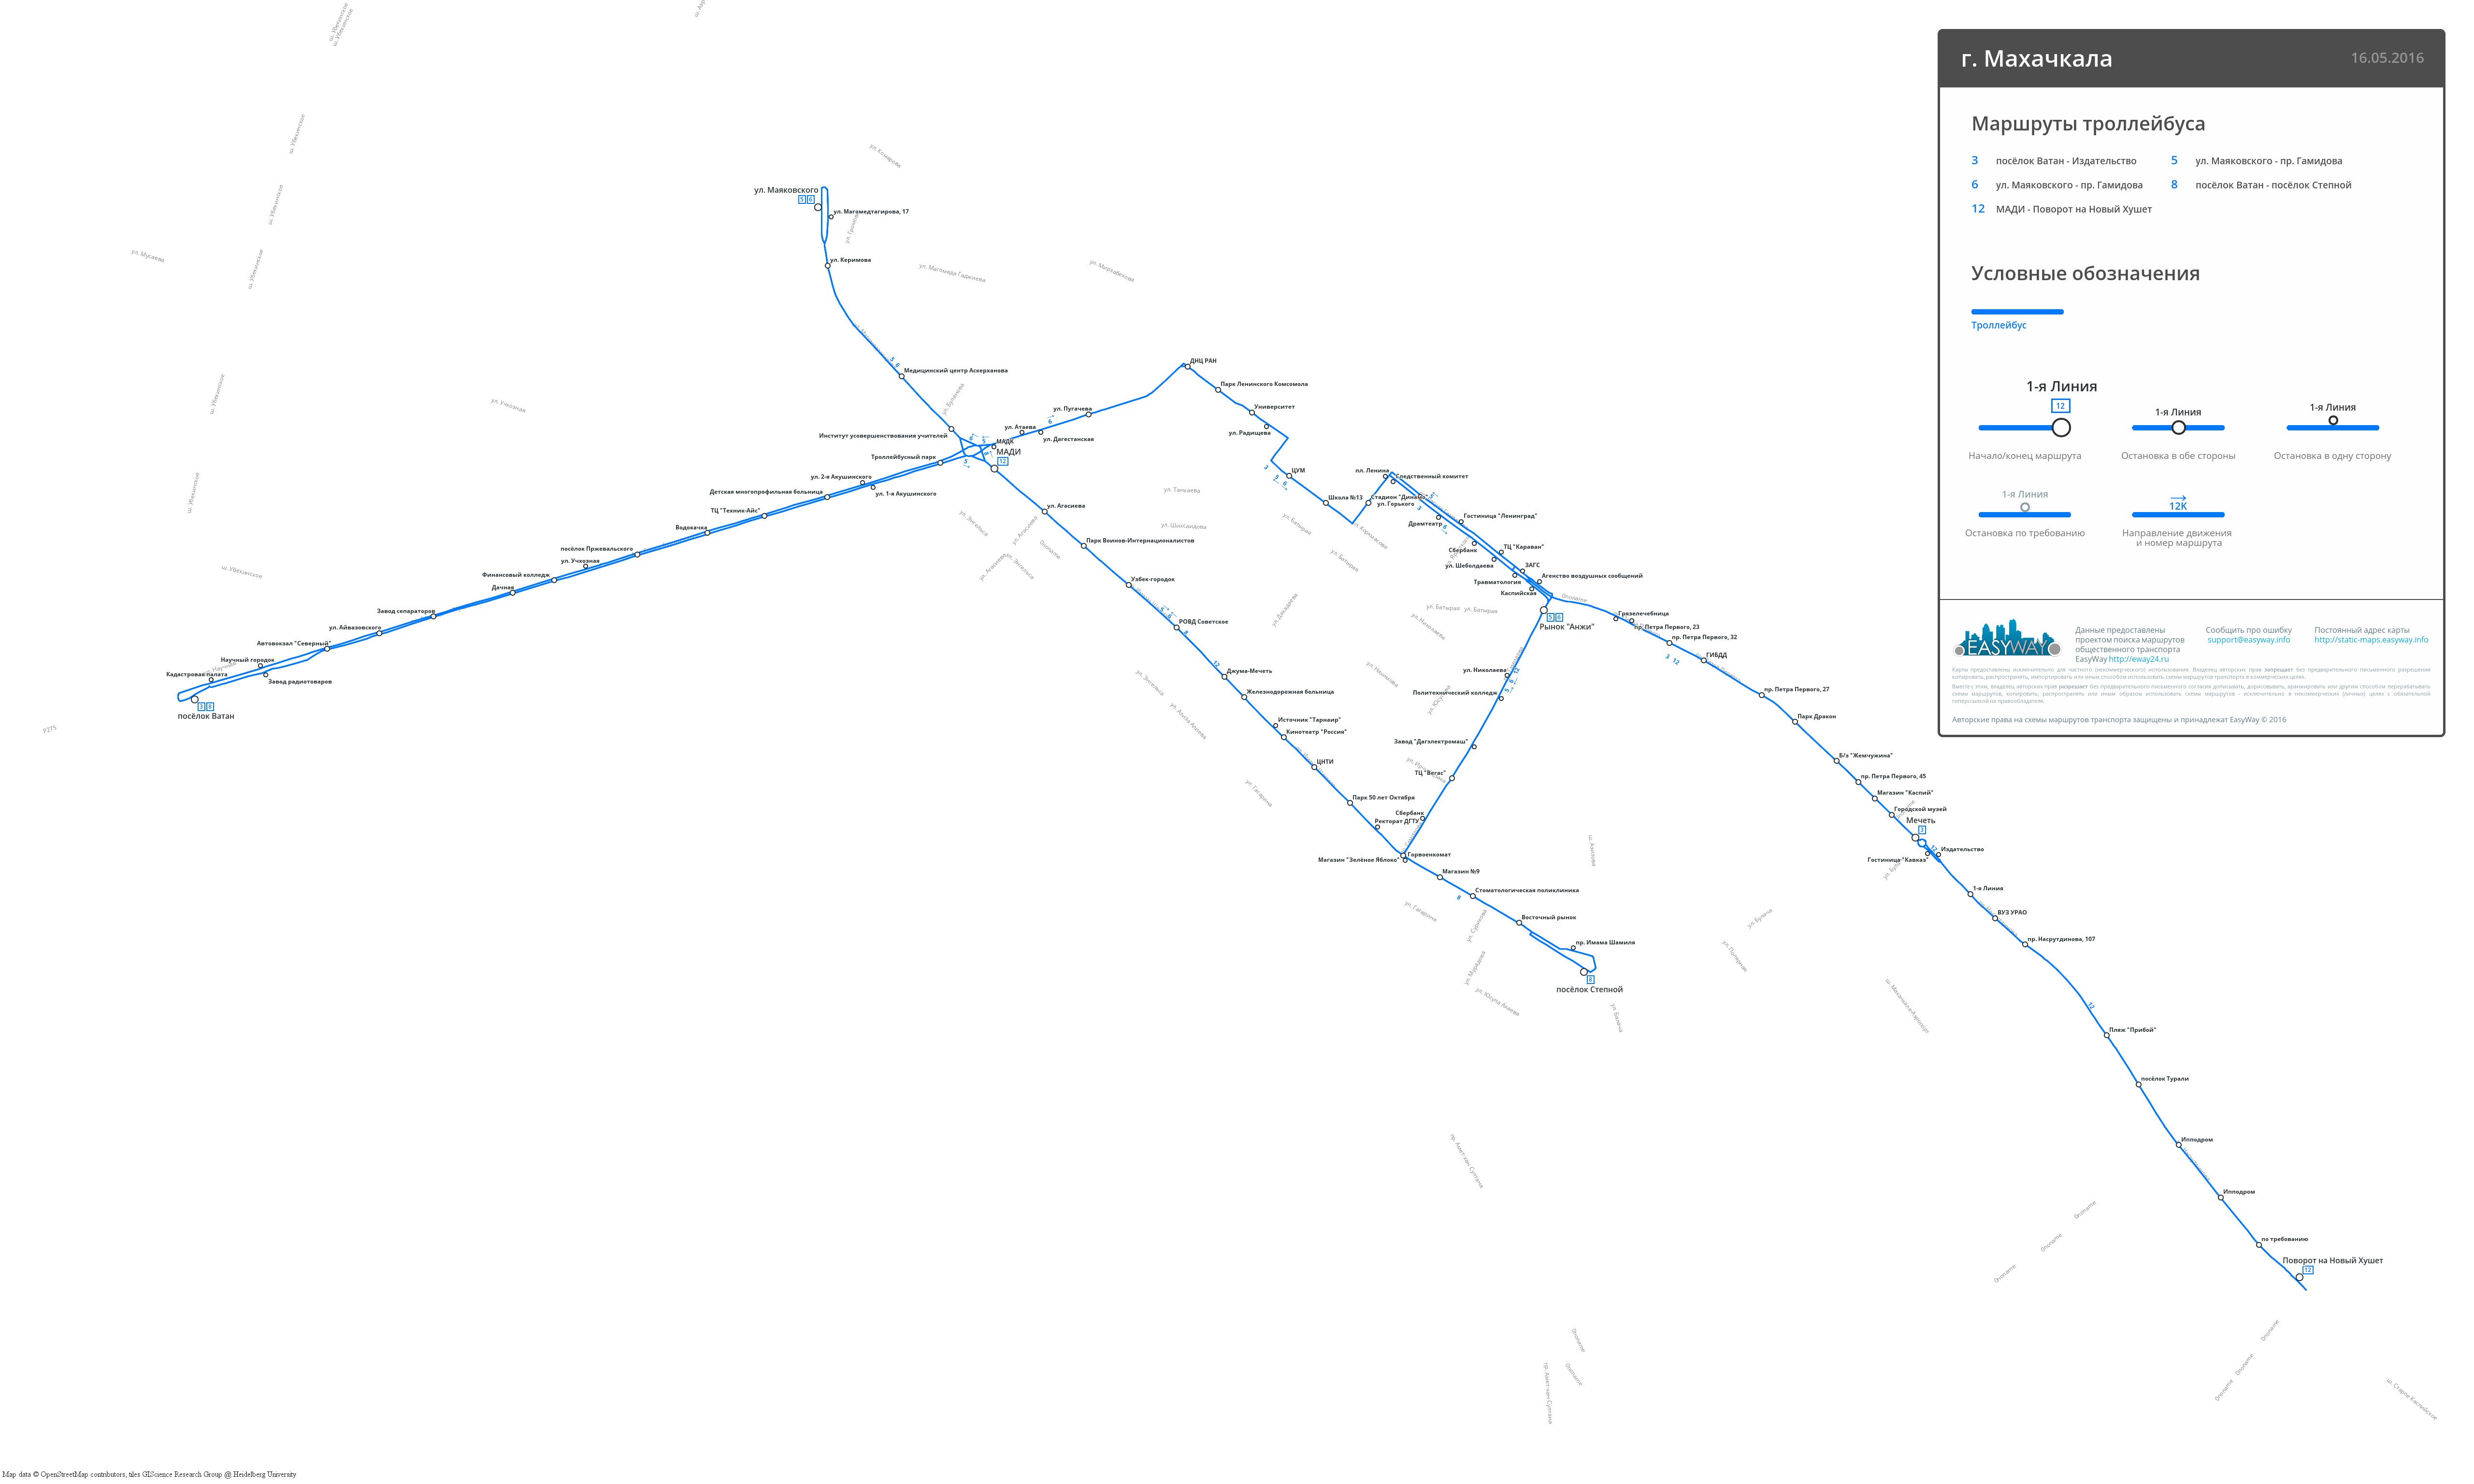 43 маршрут схема маршрута. Махачкала троллейбус схема. Схема движения троллейбусов в Махачкале. Схема троллейбусных маршрутов Махачкала. Карты маршруток Махачкалы.